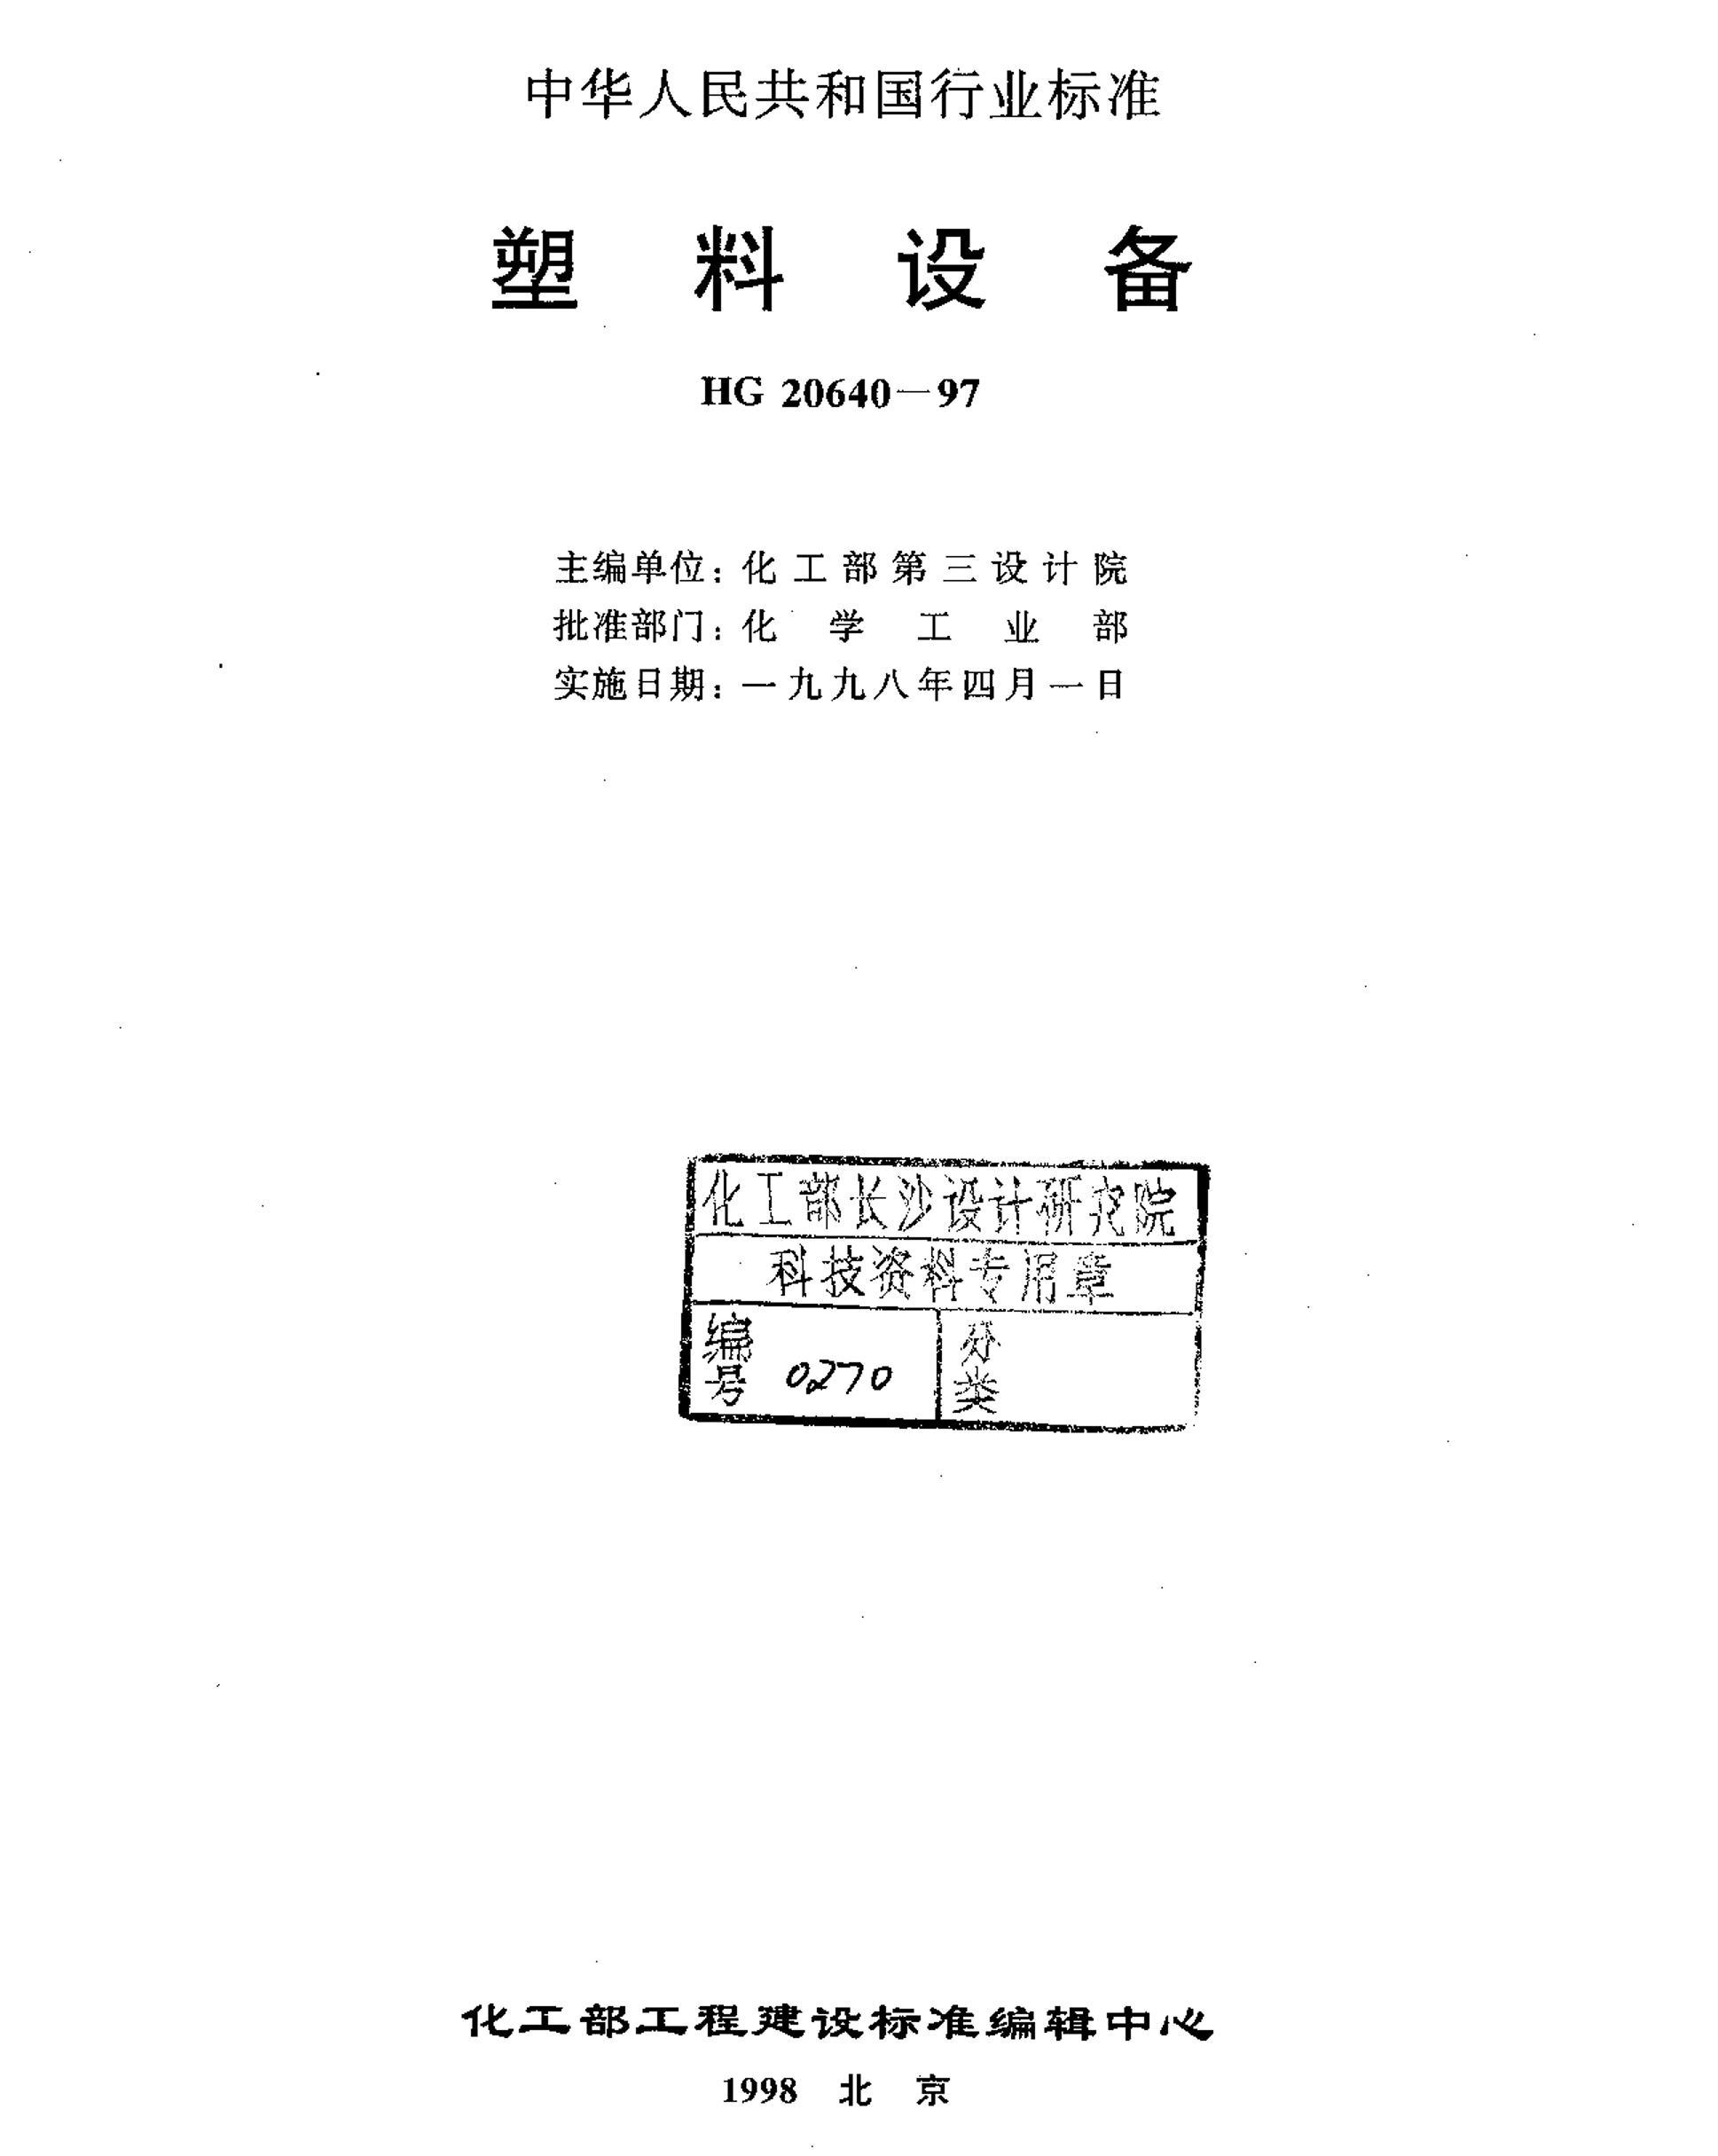 HG 20640-1997 豸.pdf3ҳ